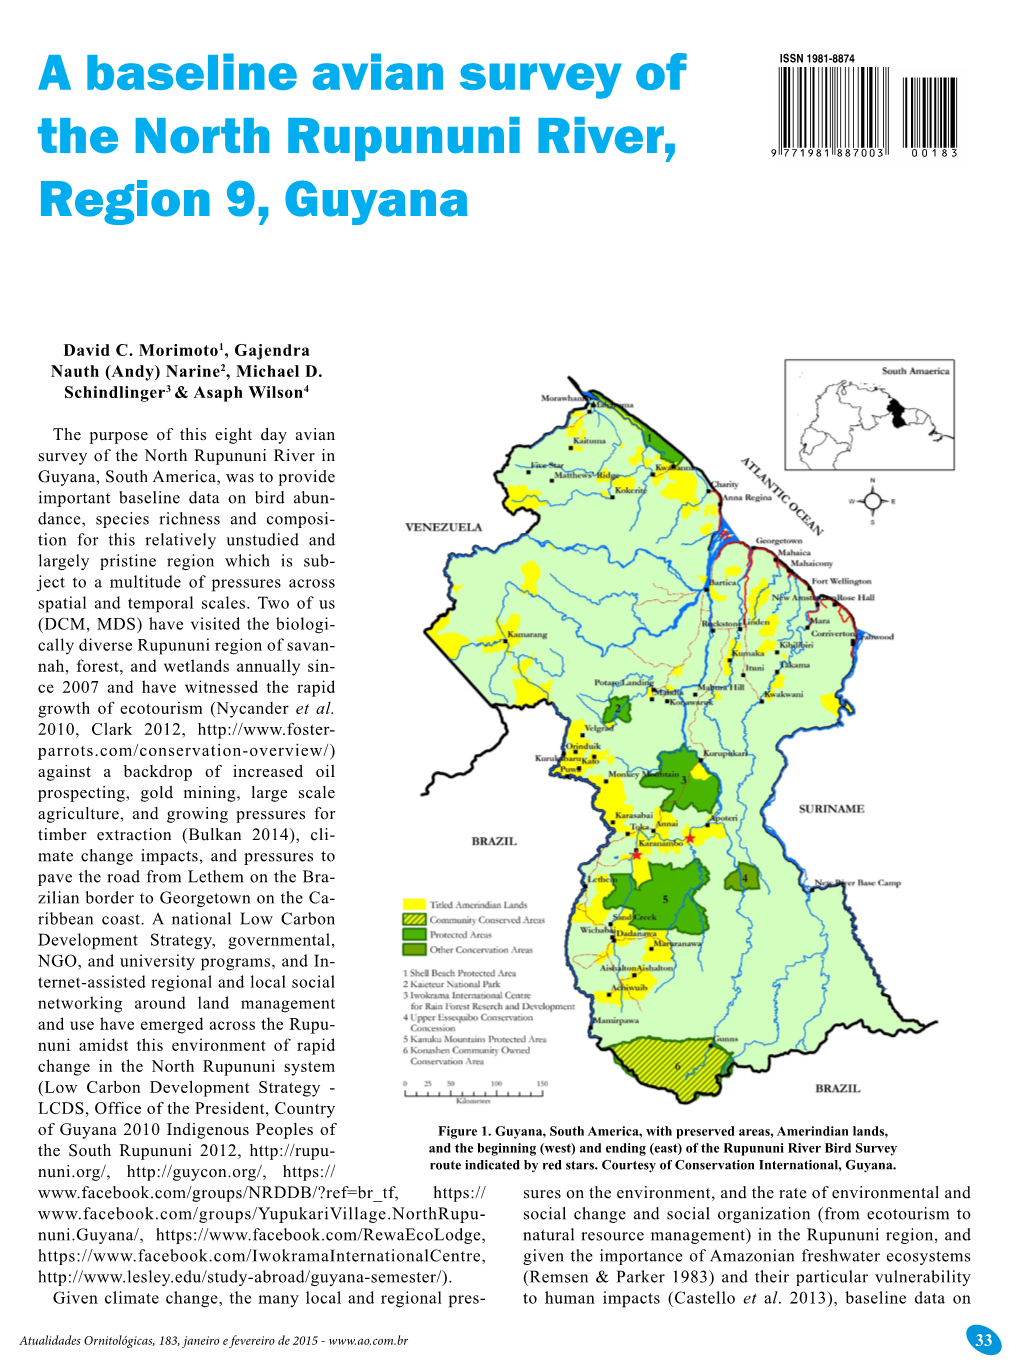 A Baseline Avian Survey of the North Rupununi River, Region 9, Guyana